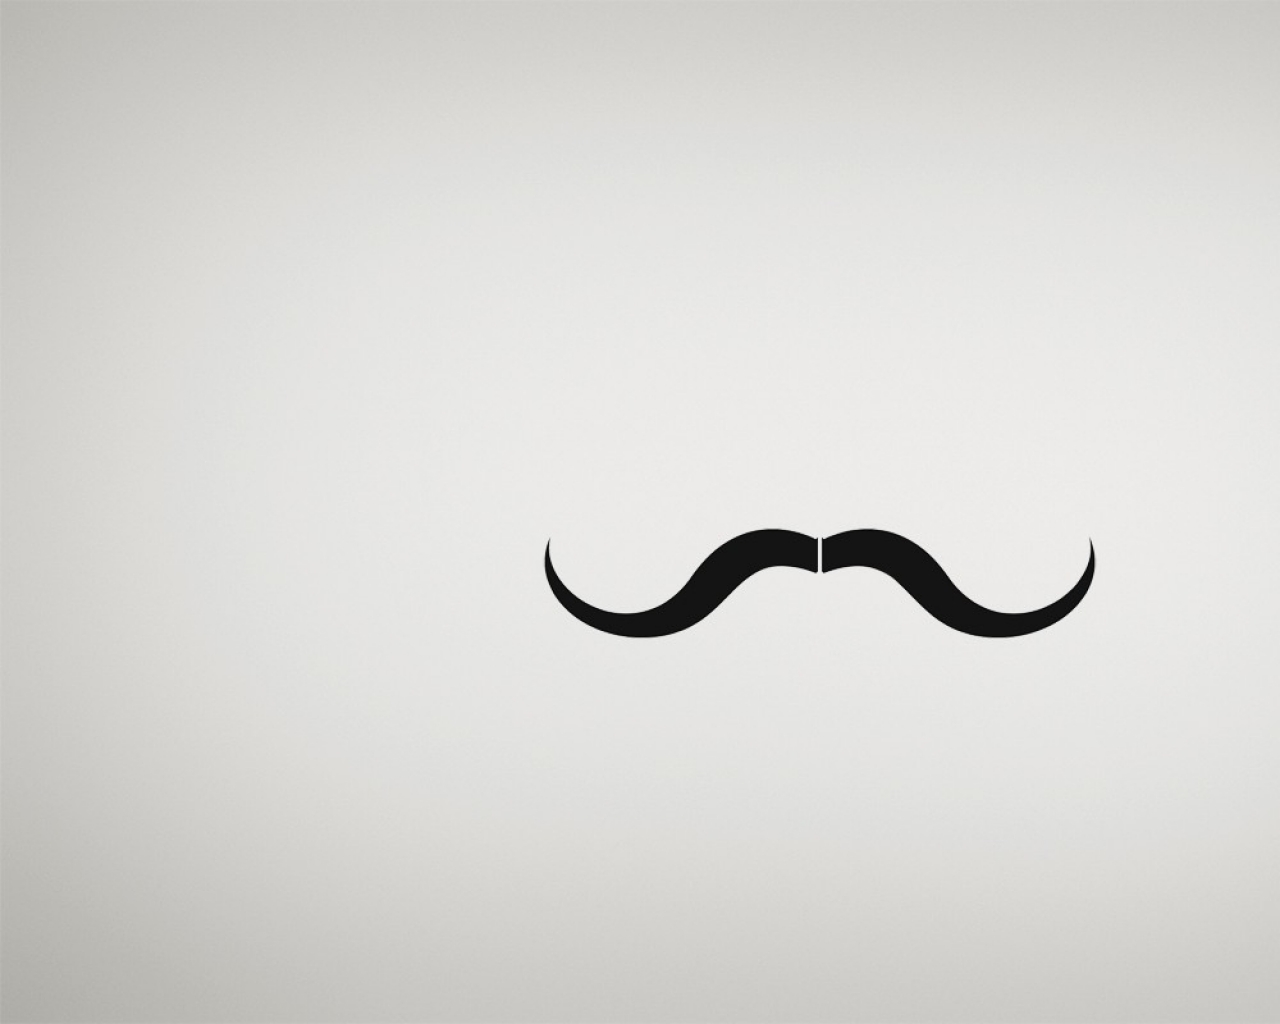 49+] Mustache Wallpaper for Desktop - WallpaperSafari